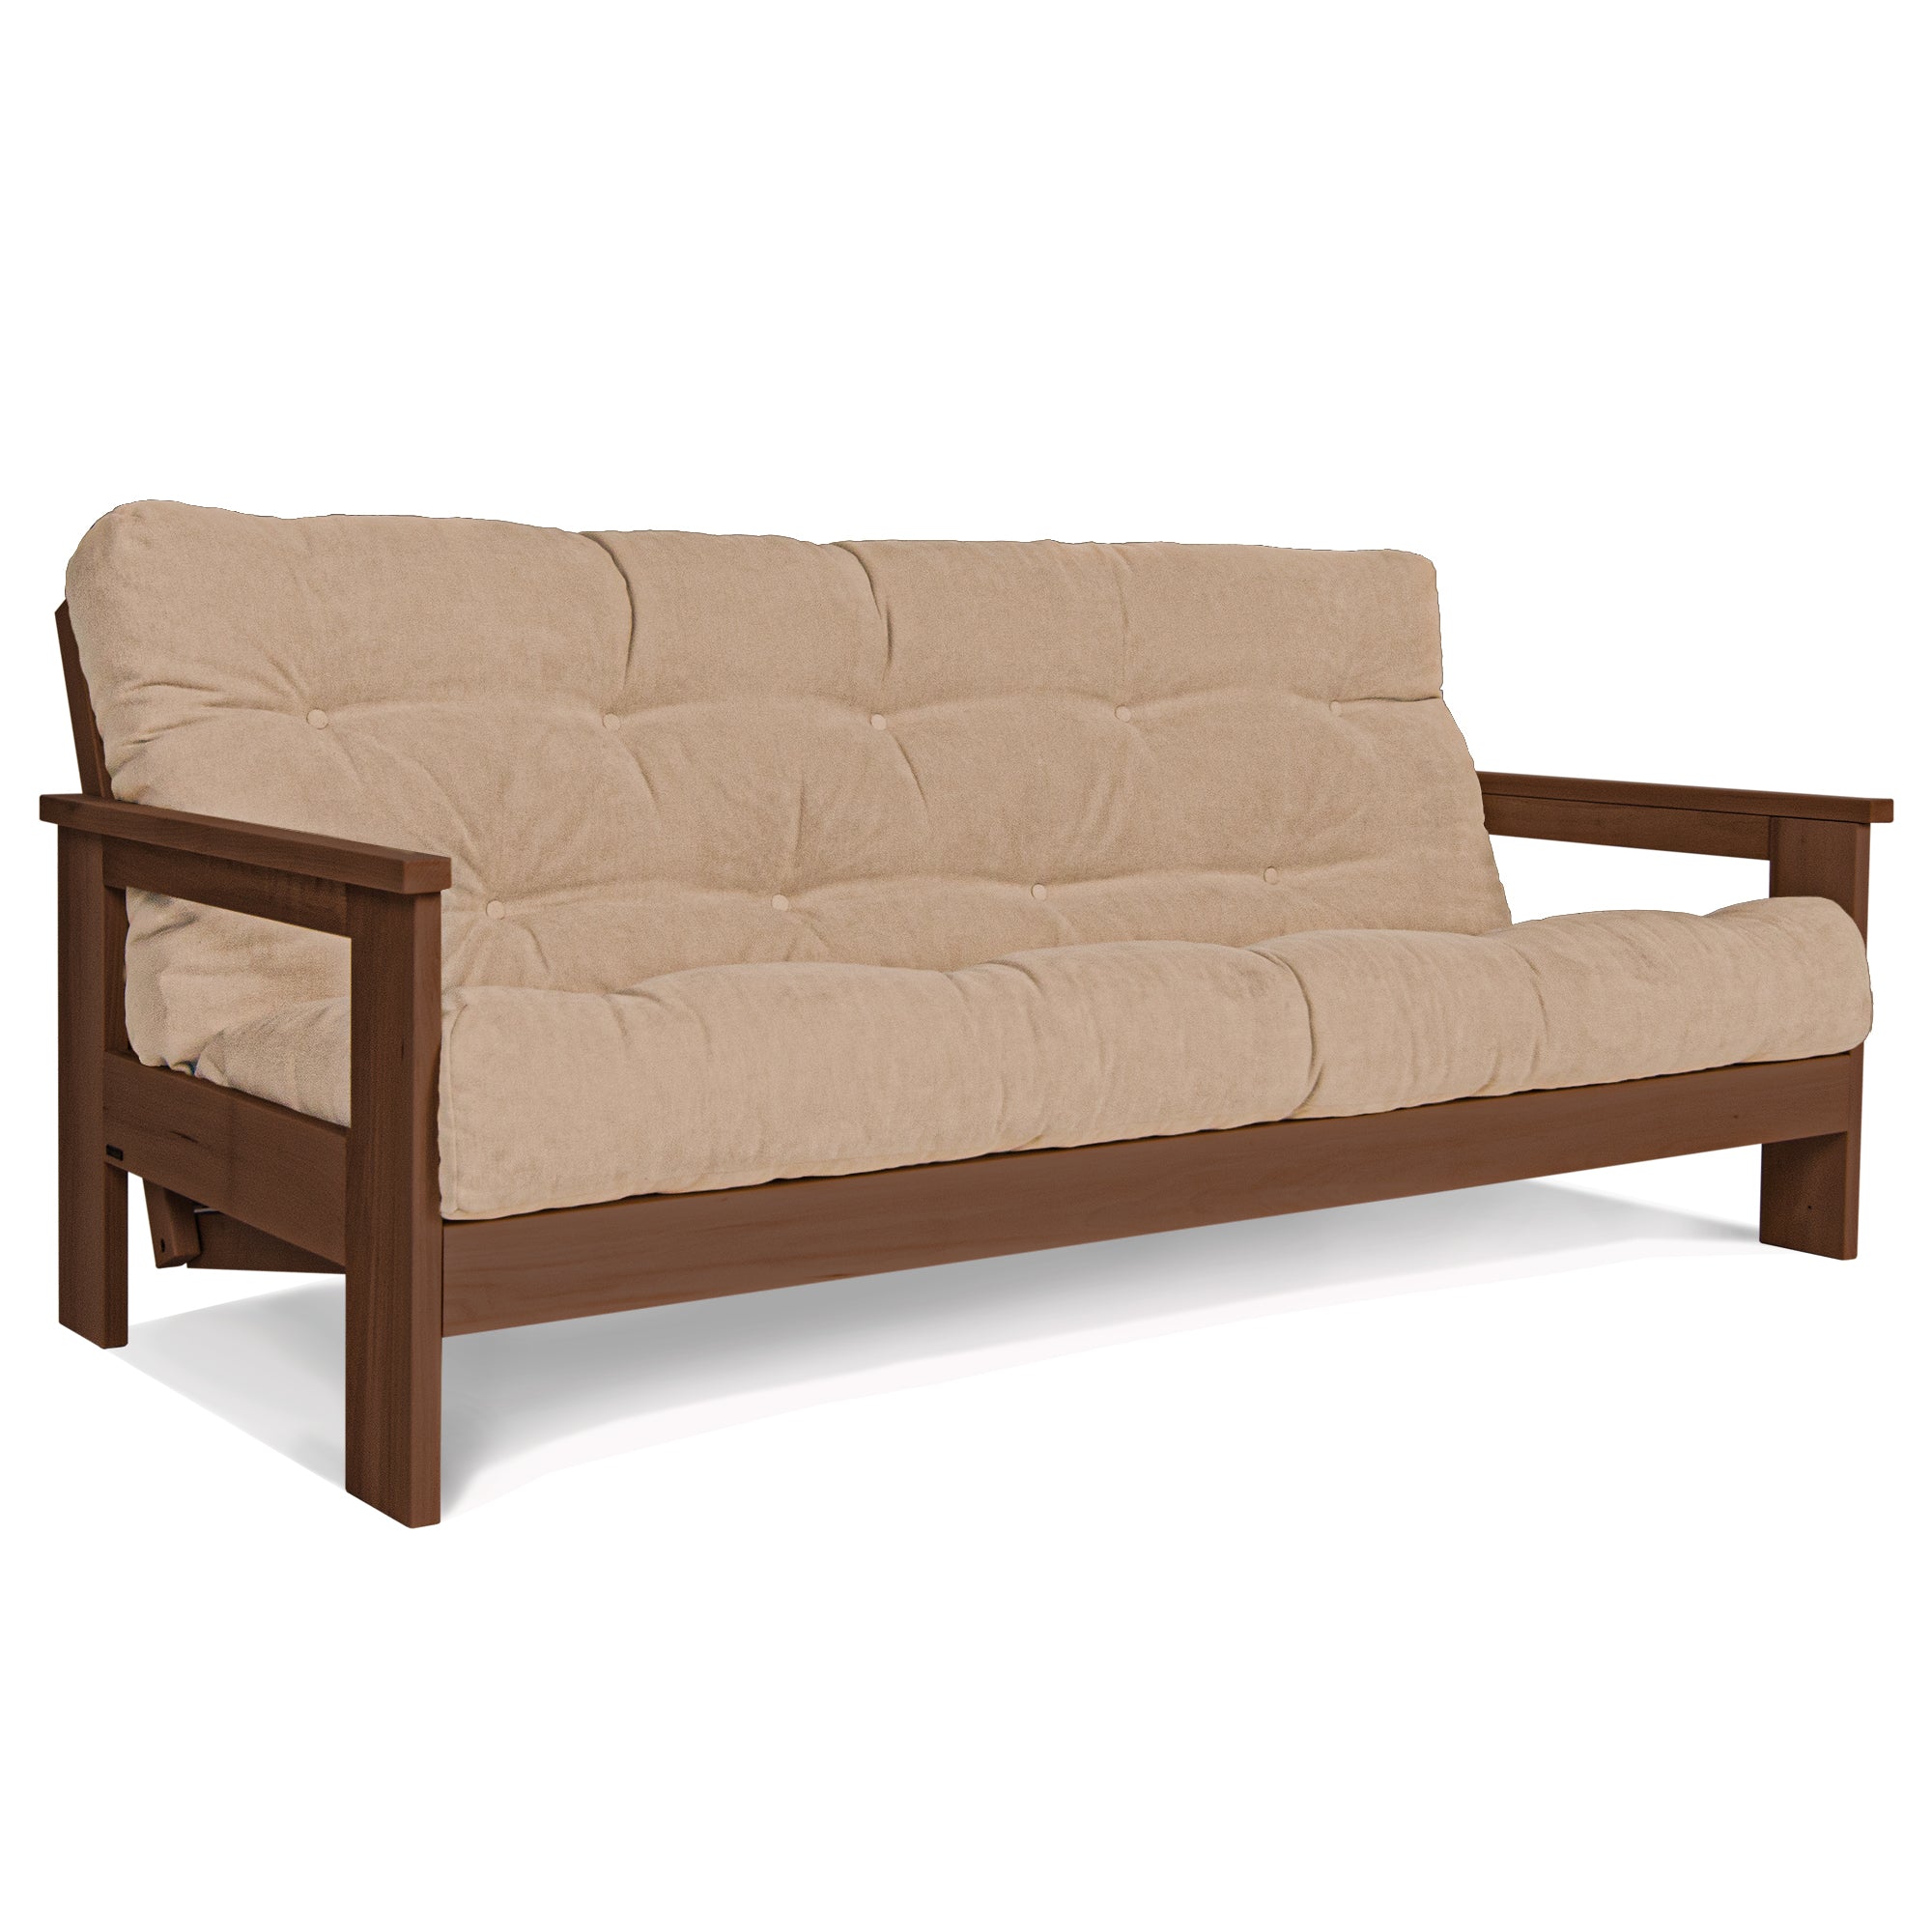 MEXICO Folding Sofa Bed-Beech Wood Frame-Walnut Colour-gray fabric colour-beige fabric colour